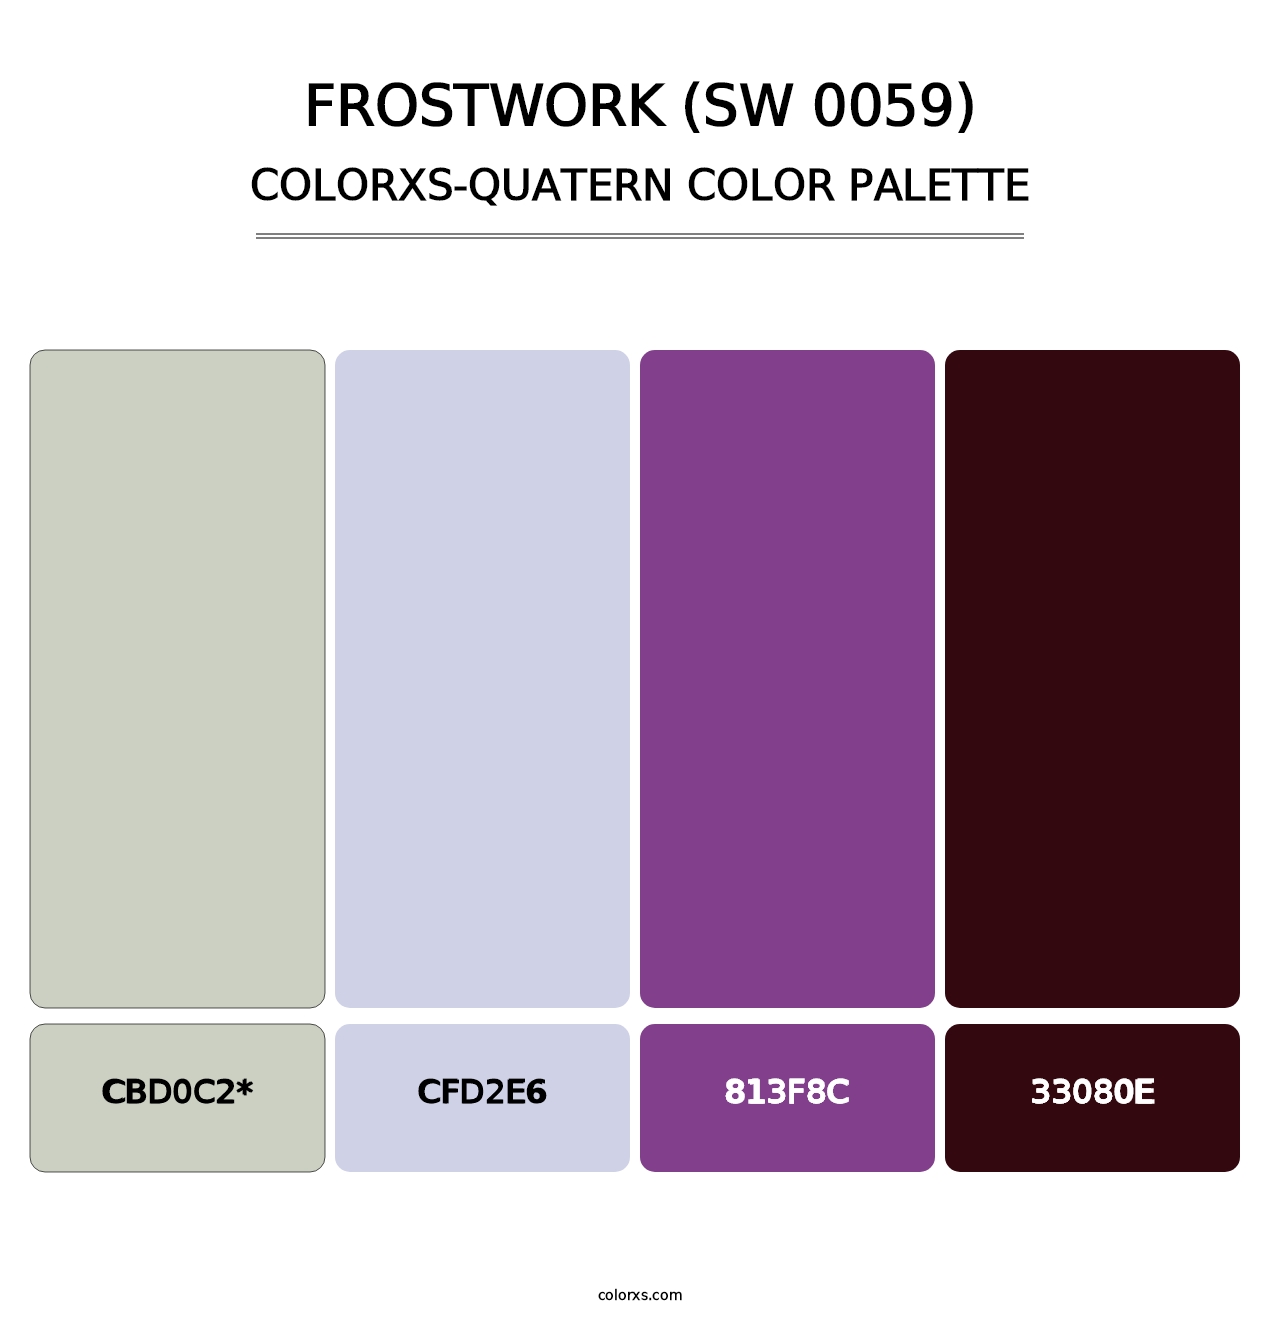 Frostwork (SW 0059) - Colorxs Quatern Palette